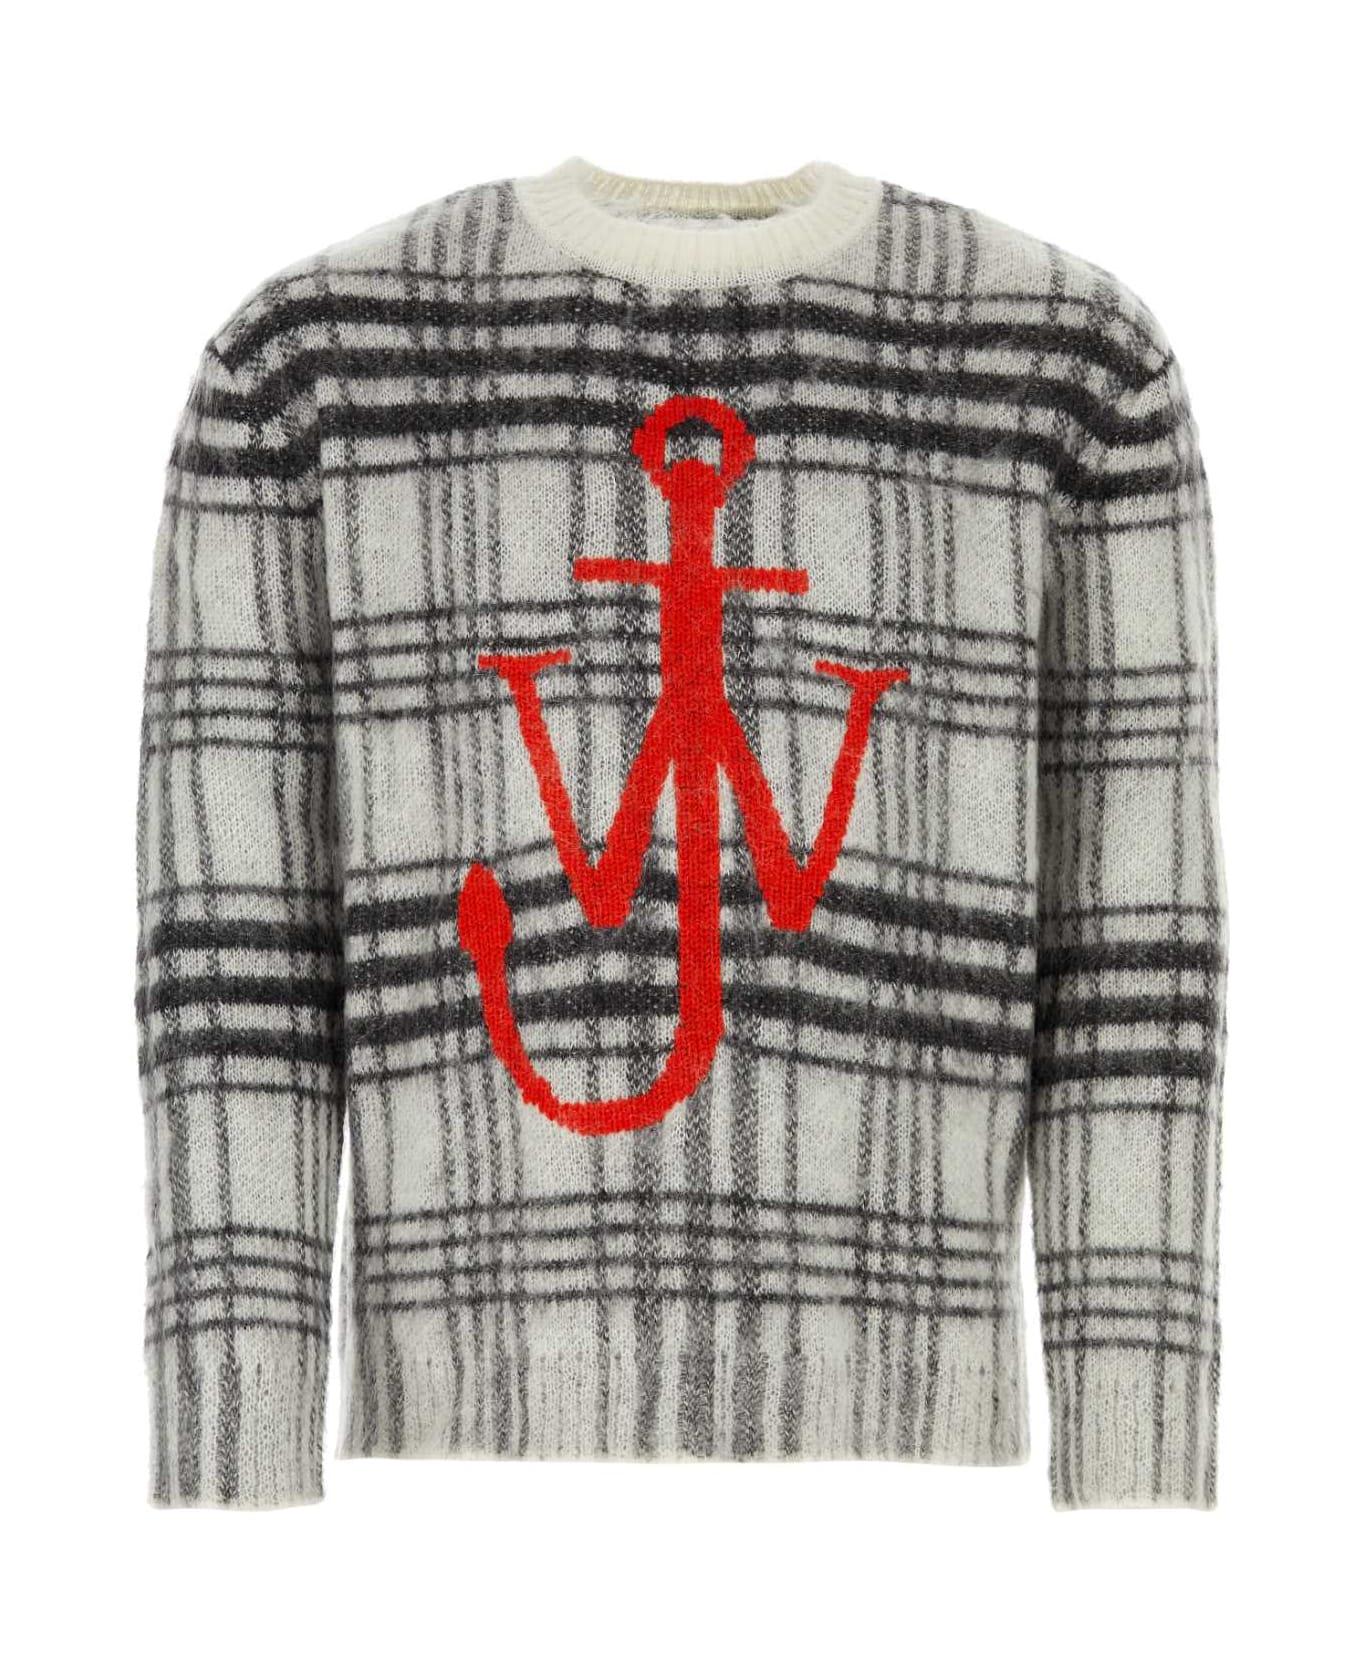 J.W. Anderson Embroidered Nylon Blend Sweater - WHITEBLACK